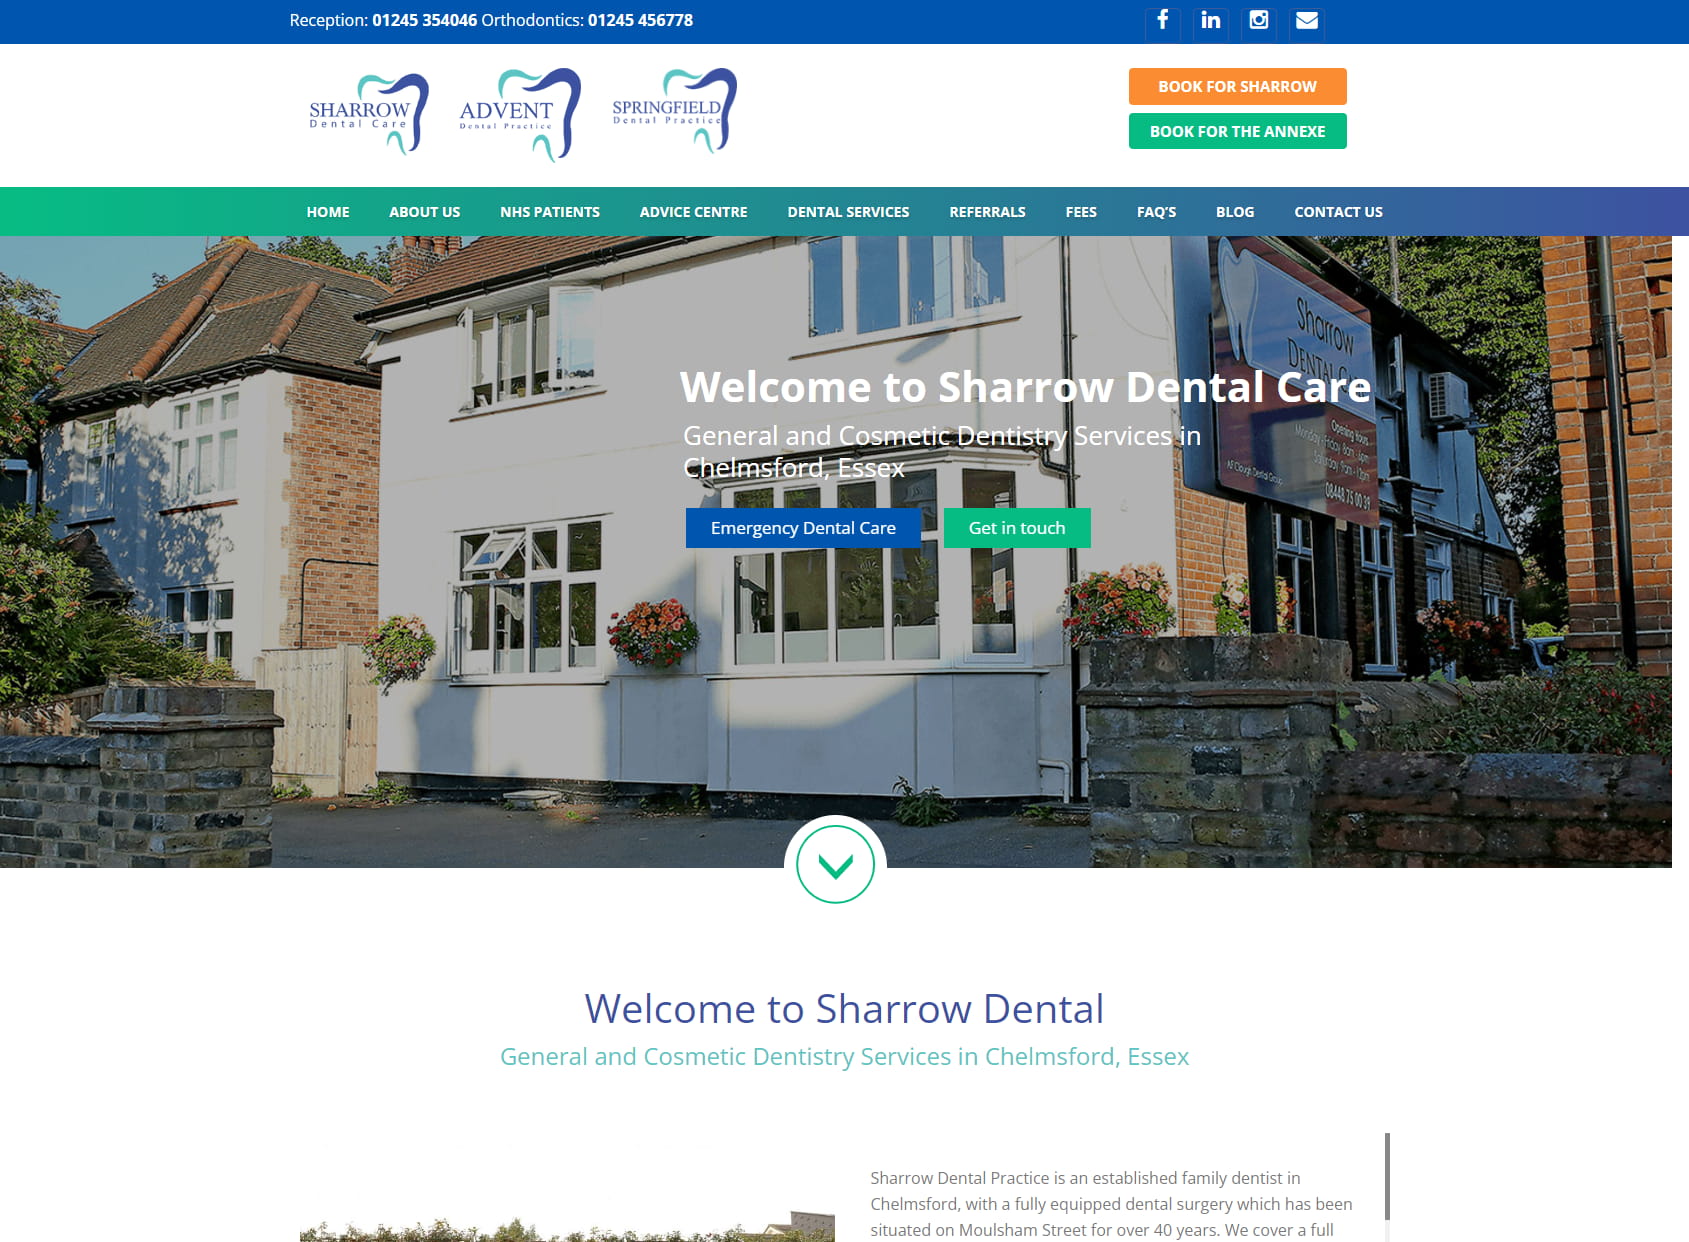 Sharrow Dental Practice Chelmsford